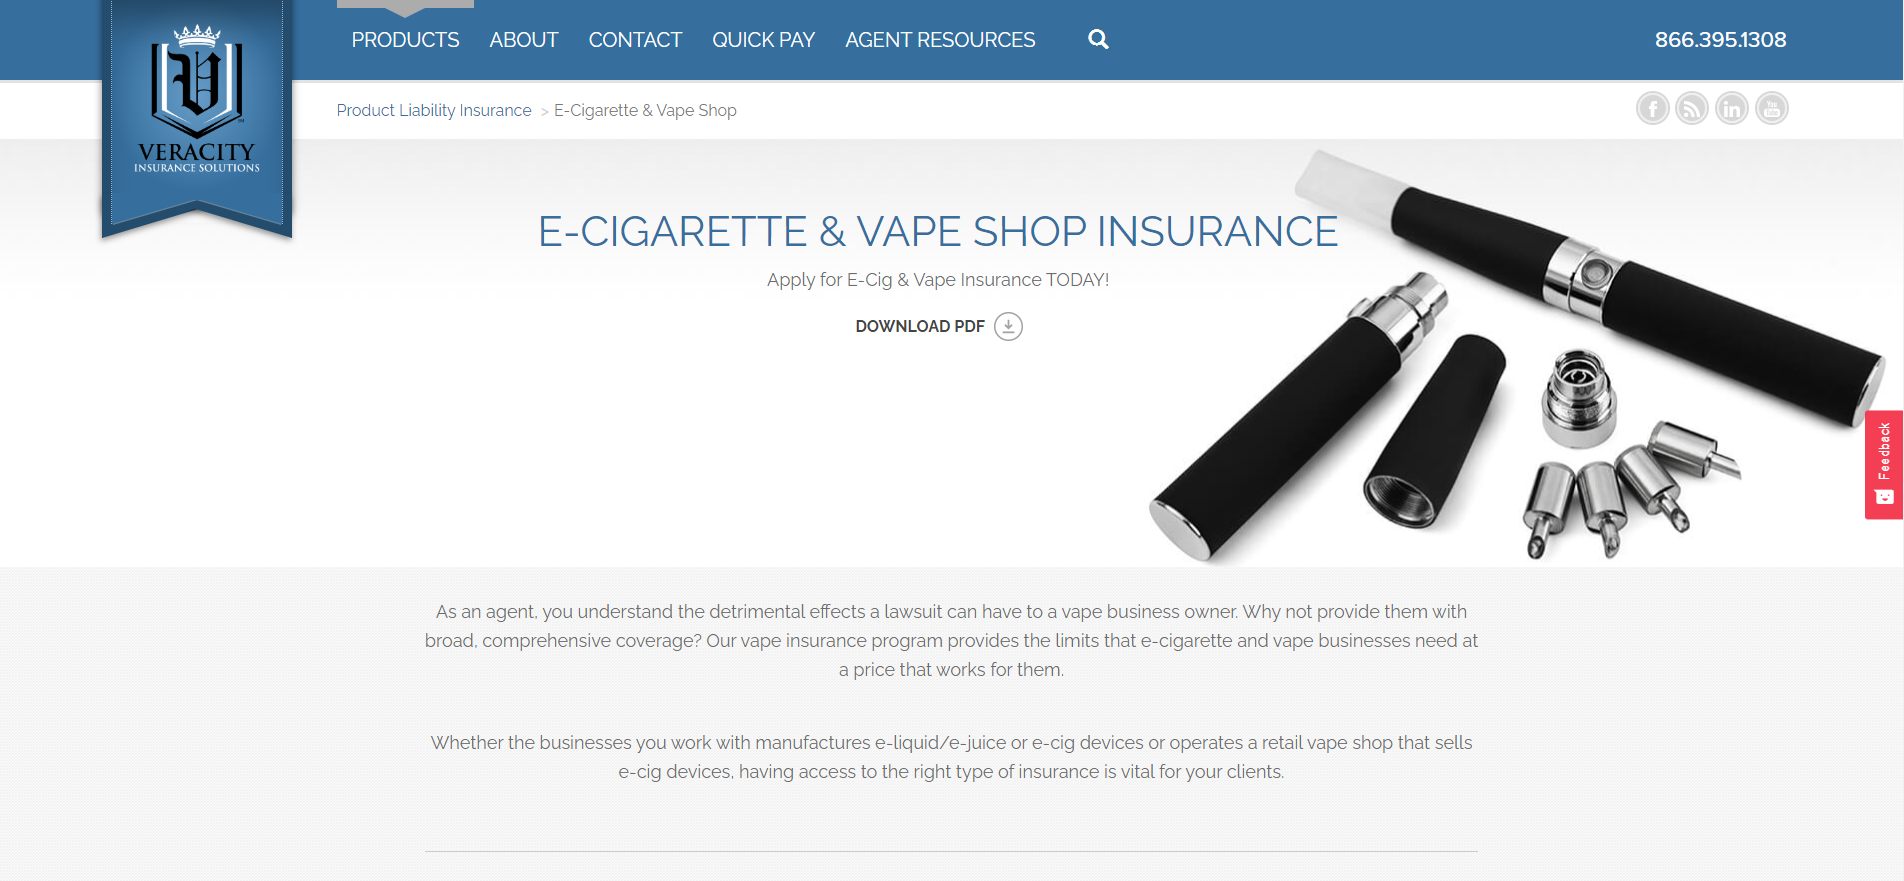 A screenshot from the Veracity Insurance website